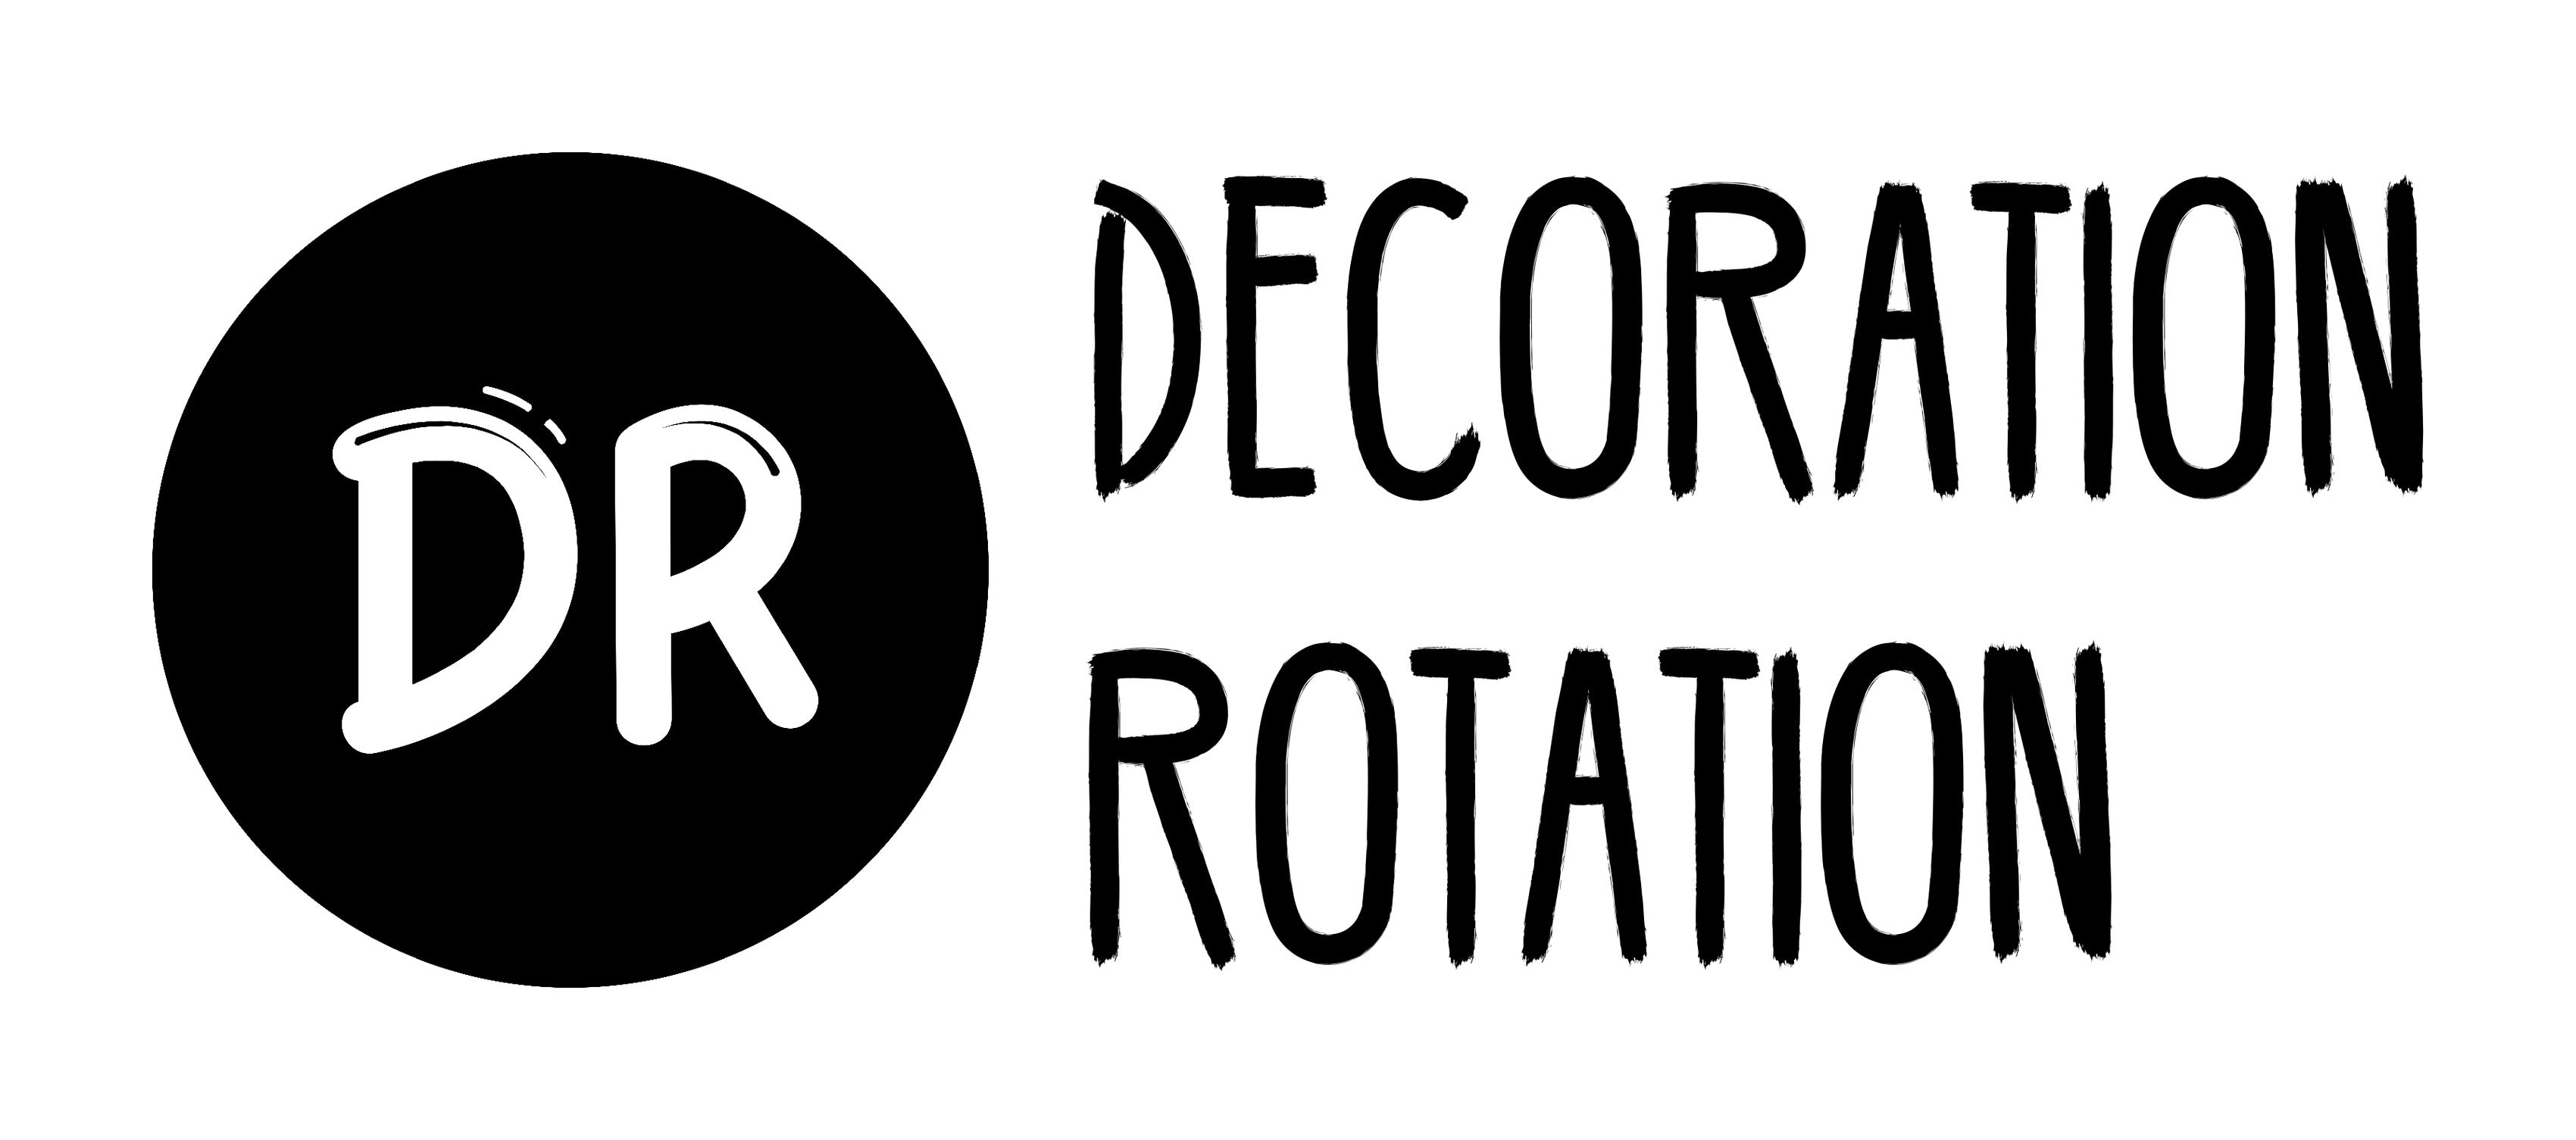 Decoration Rotation